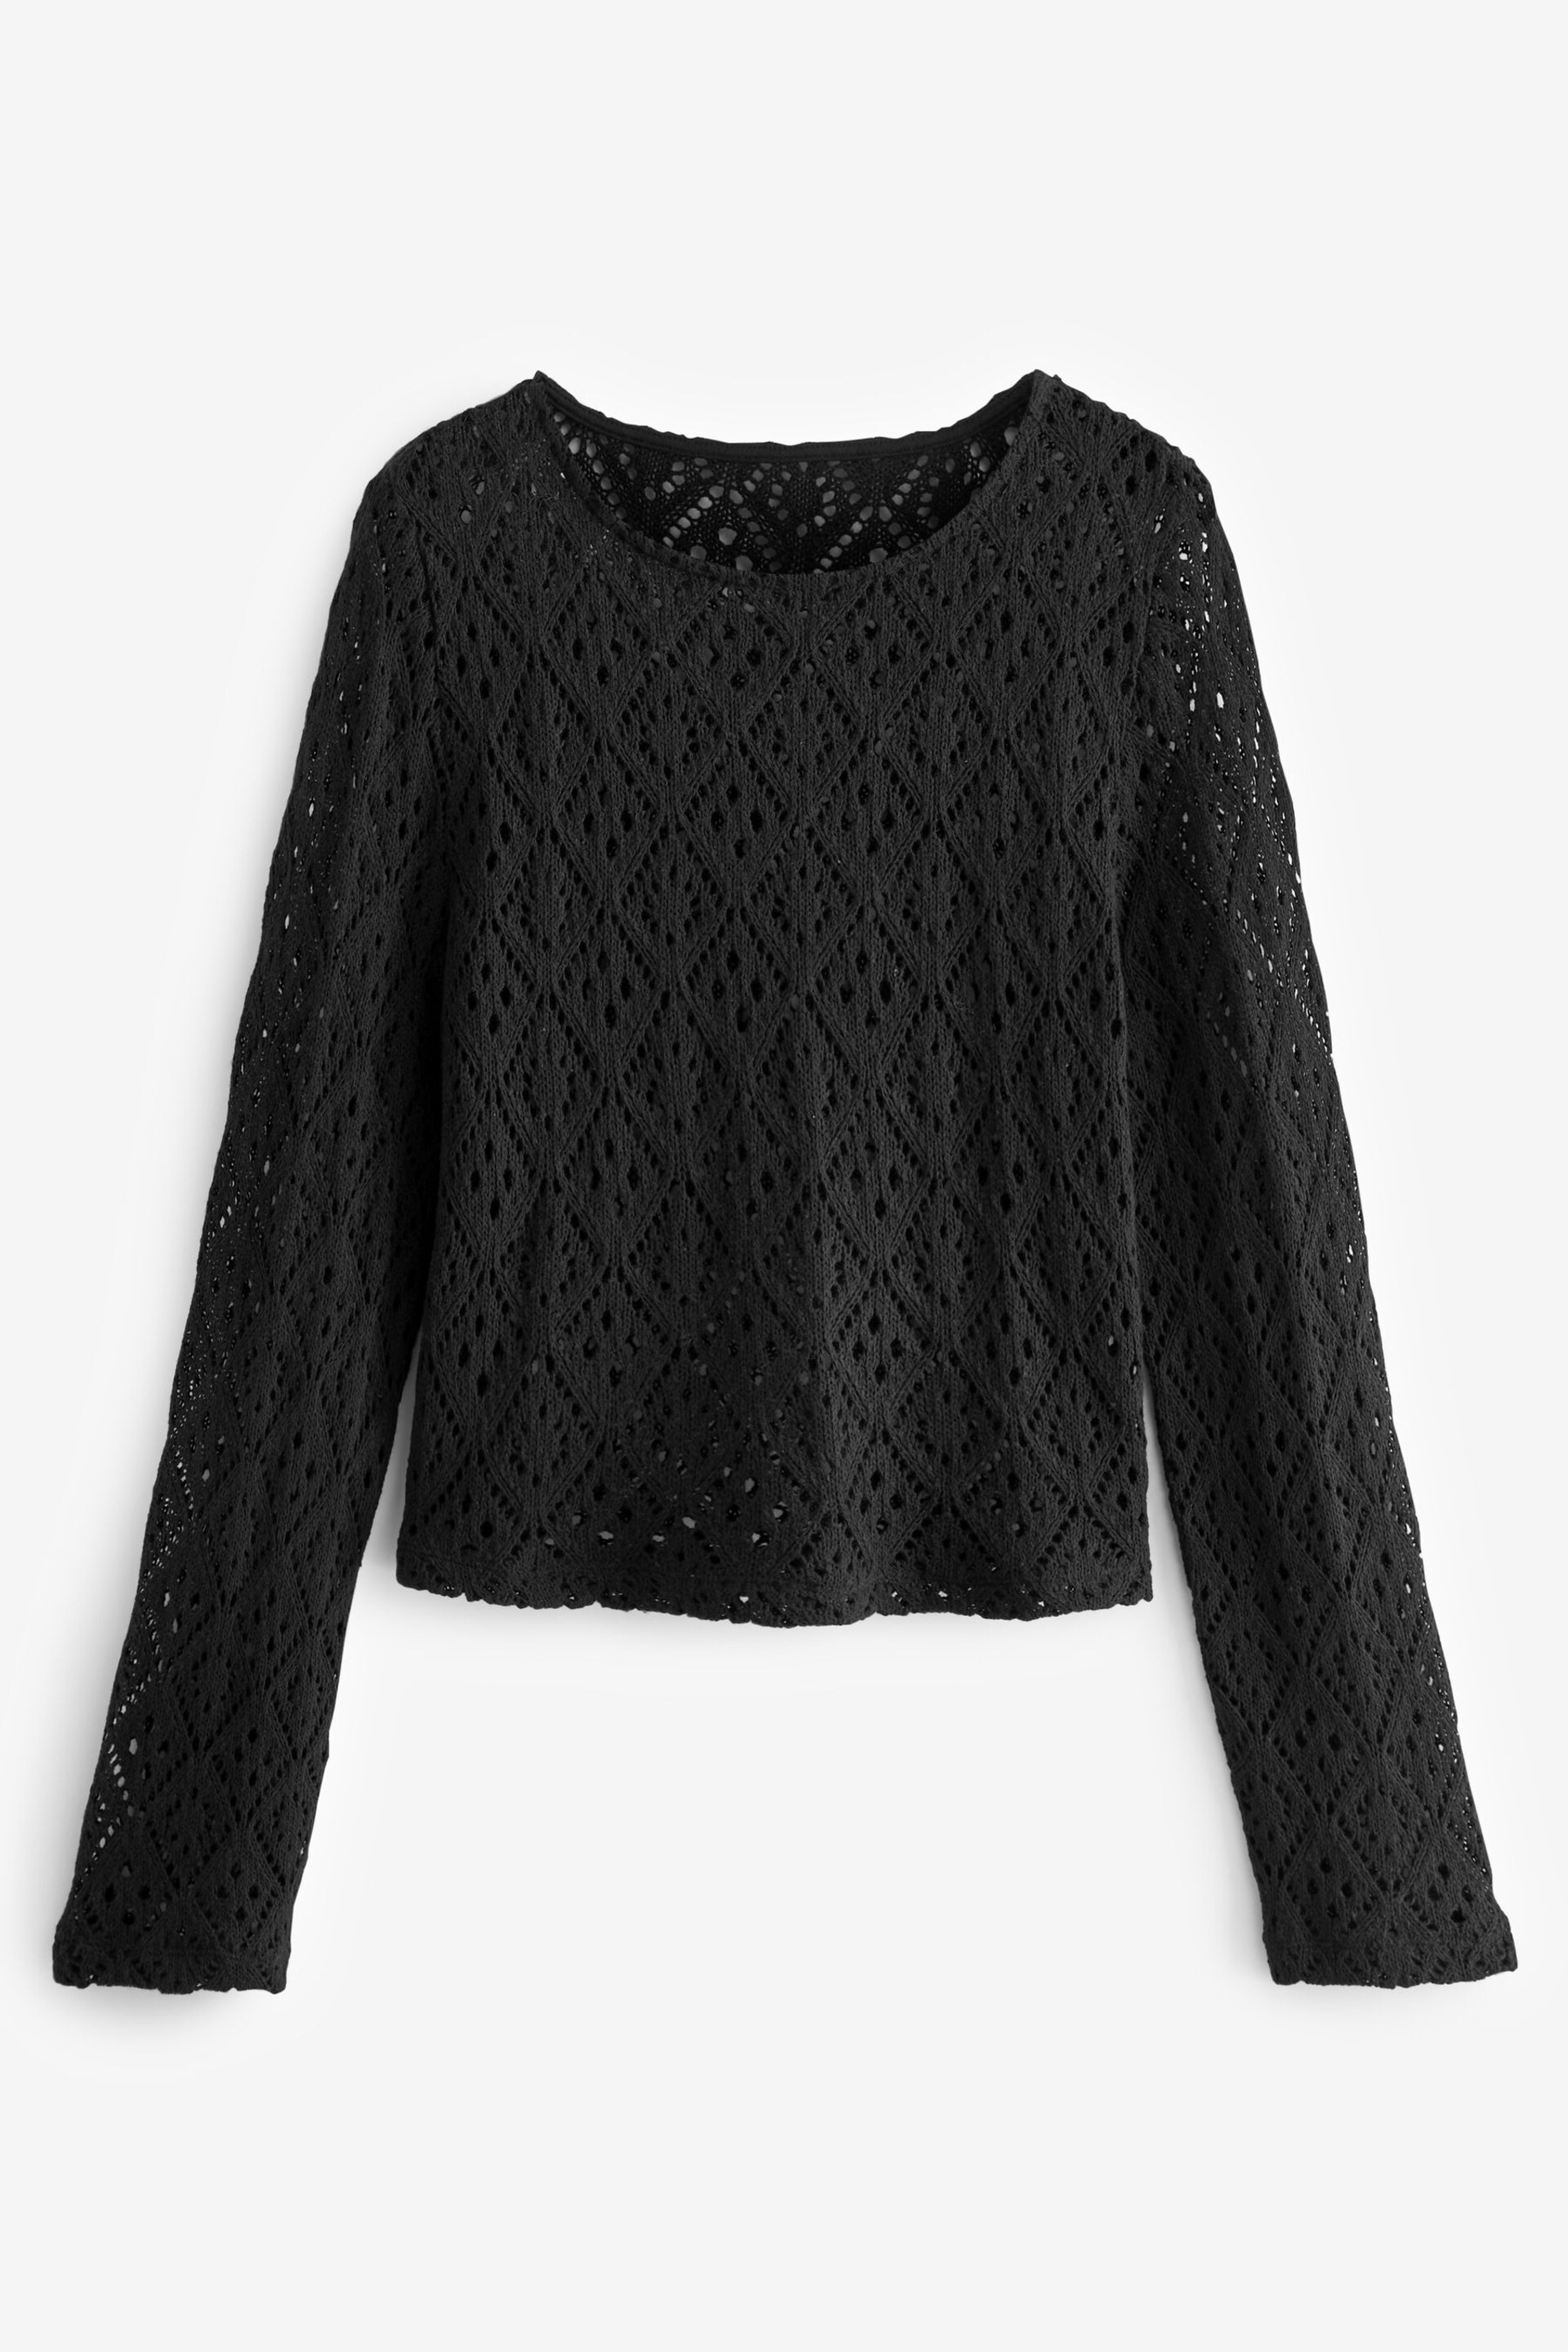 Black Wide Sleeve Crochet Jumper - Image 4 of 5